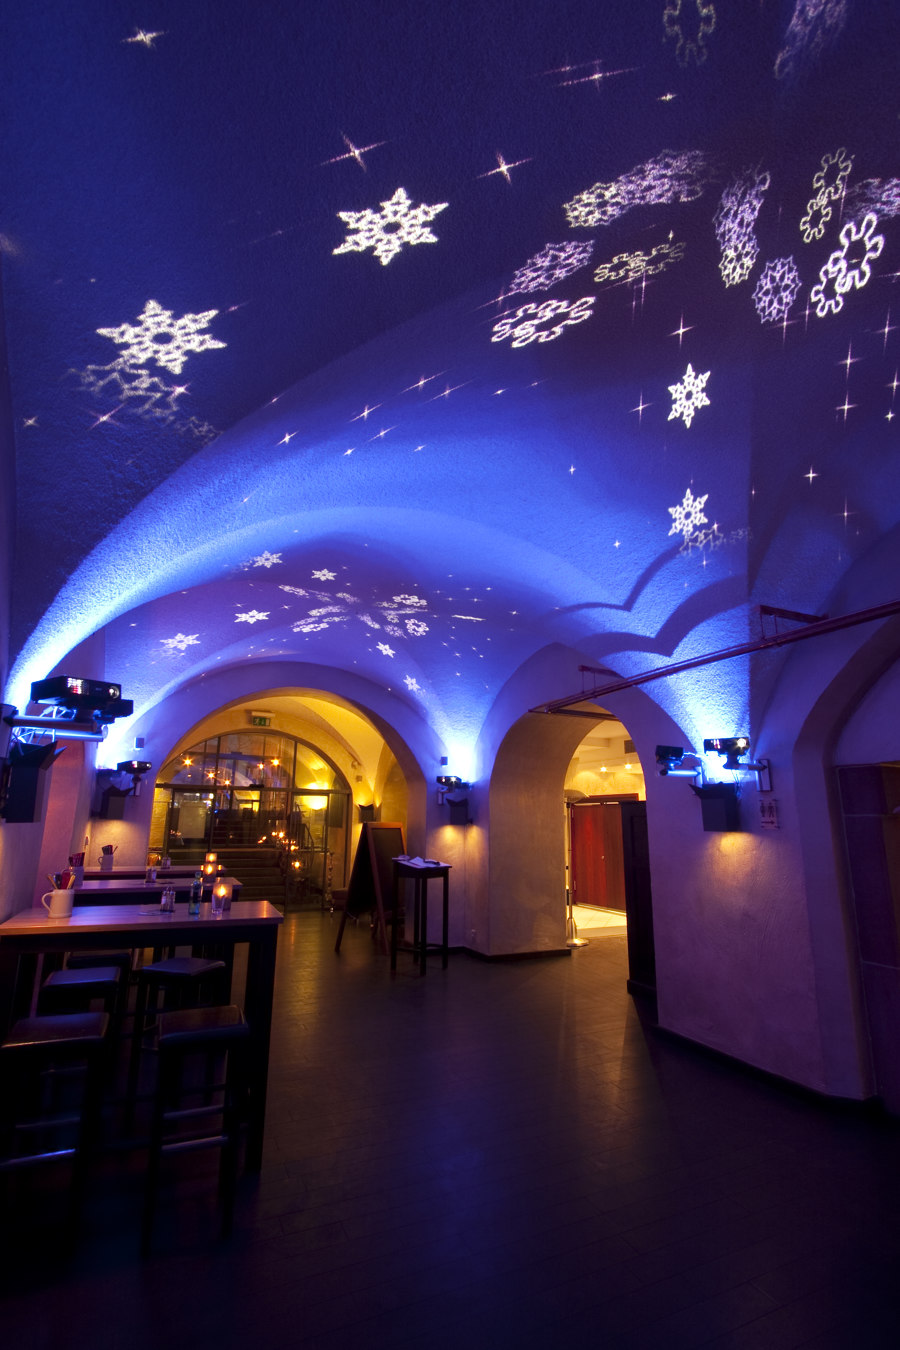 Ratskeller by Tobias Link | Restaurant interiors